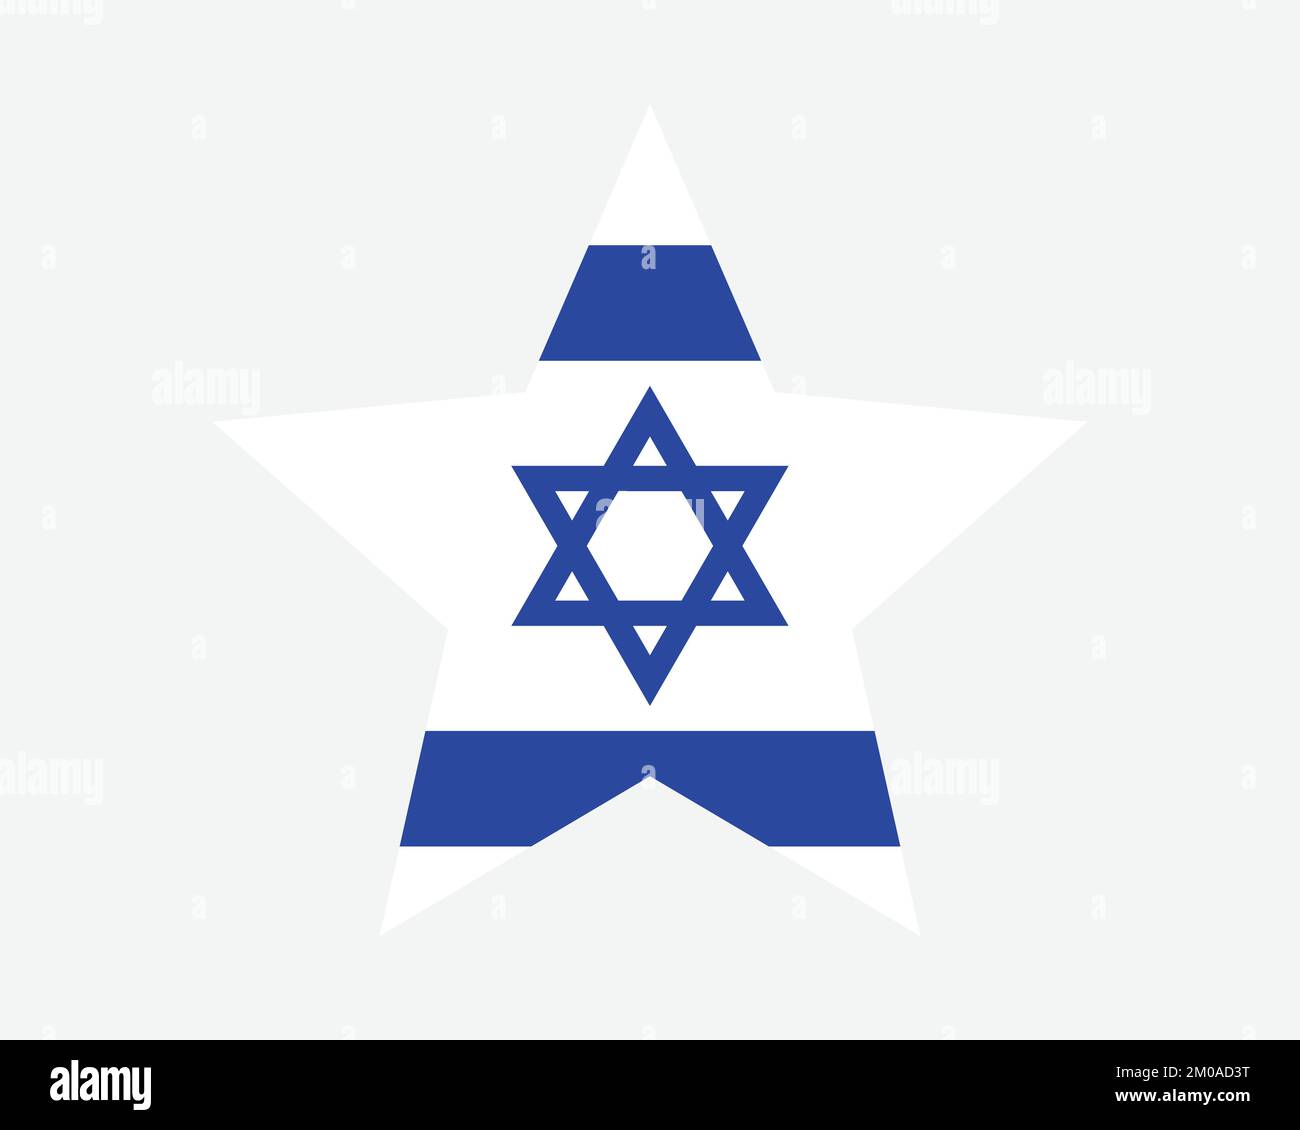 Israel Star Flag. Israeli Star Shape Flag. State of Israel Country National Banner Icon Symbol Vector Flat Artwork Graphic Illustration Stock Vector